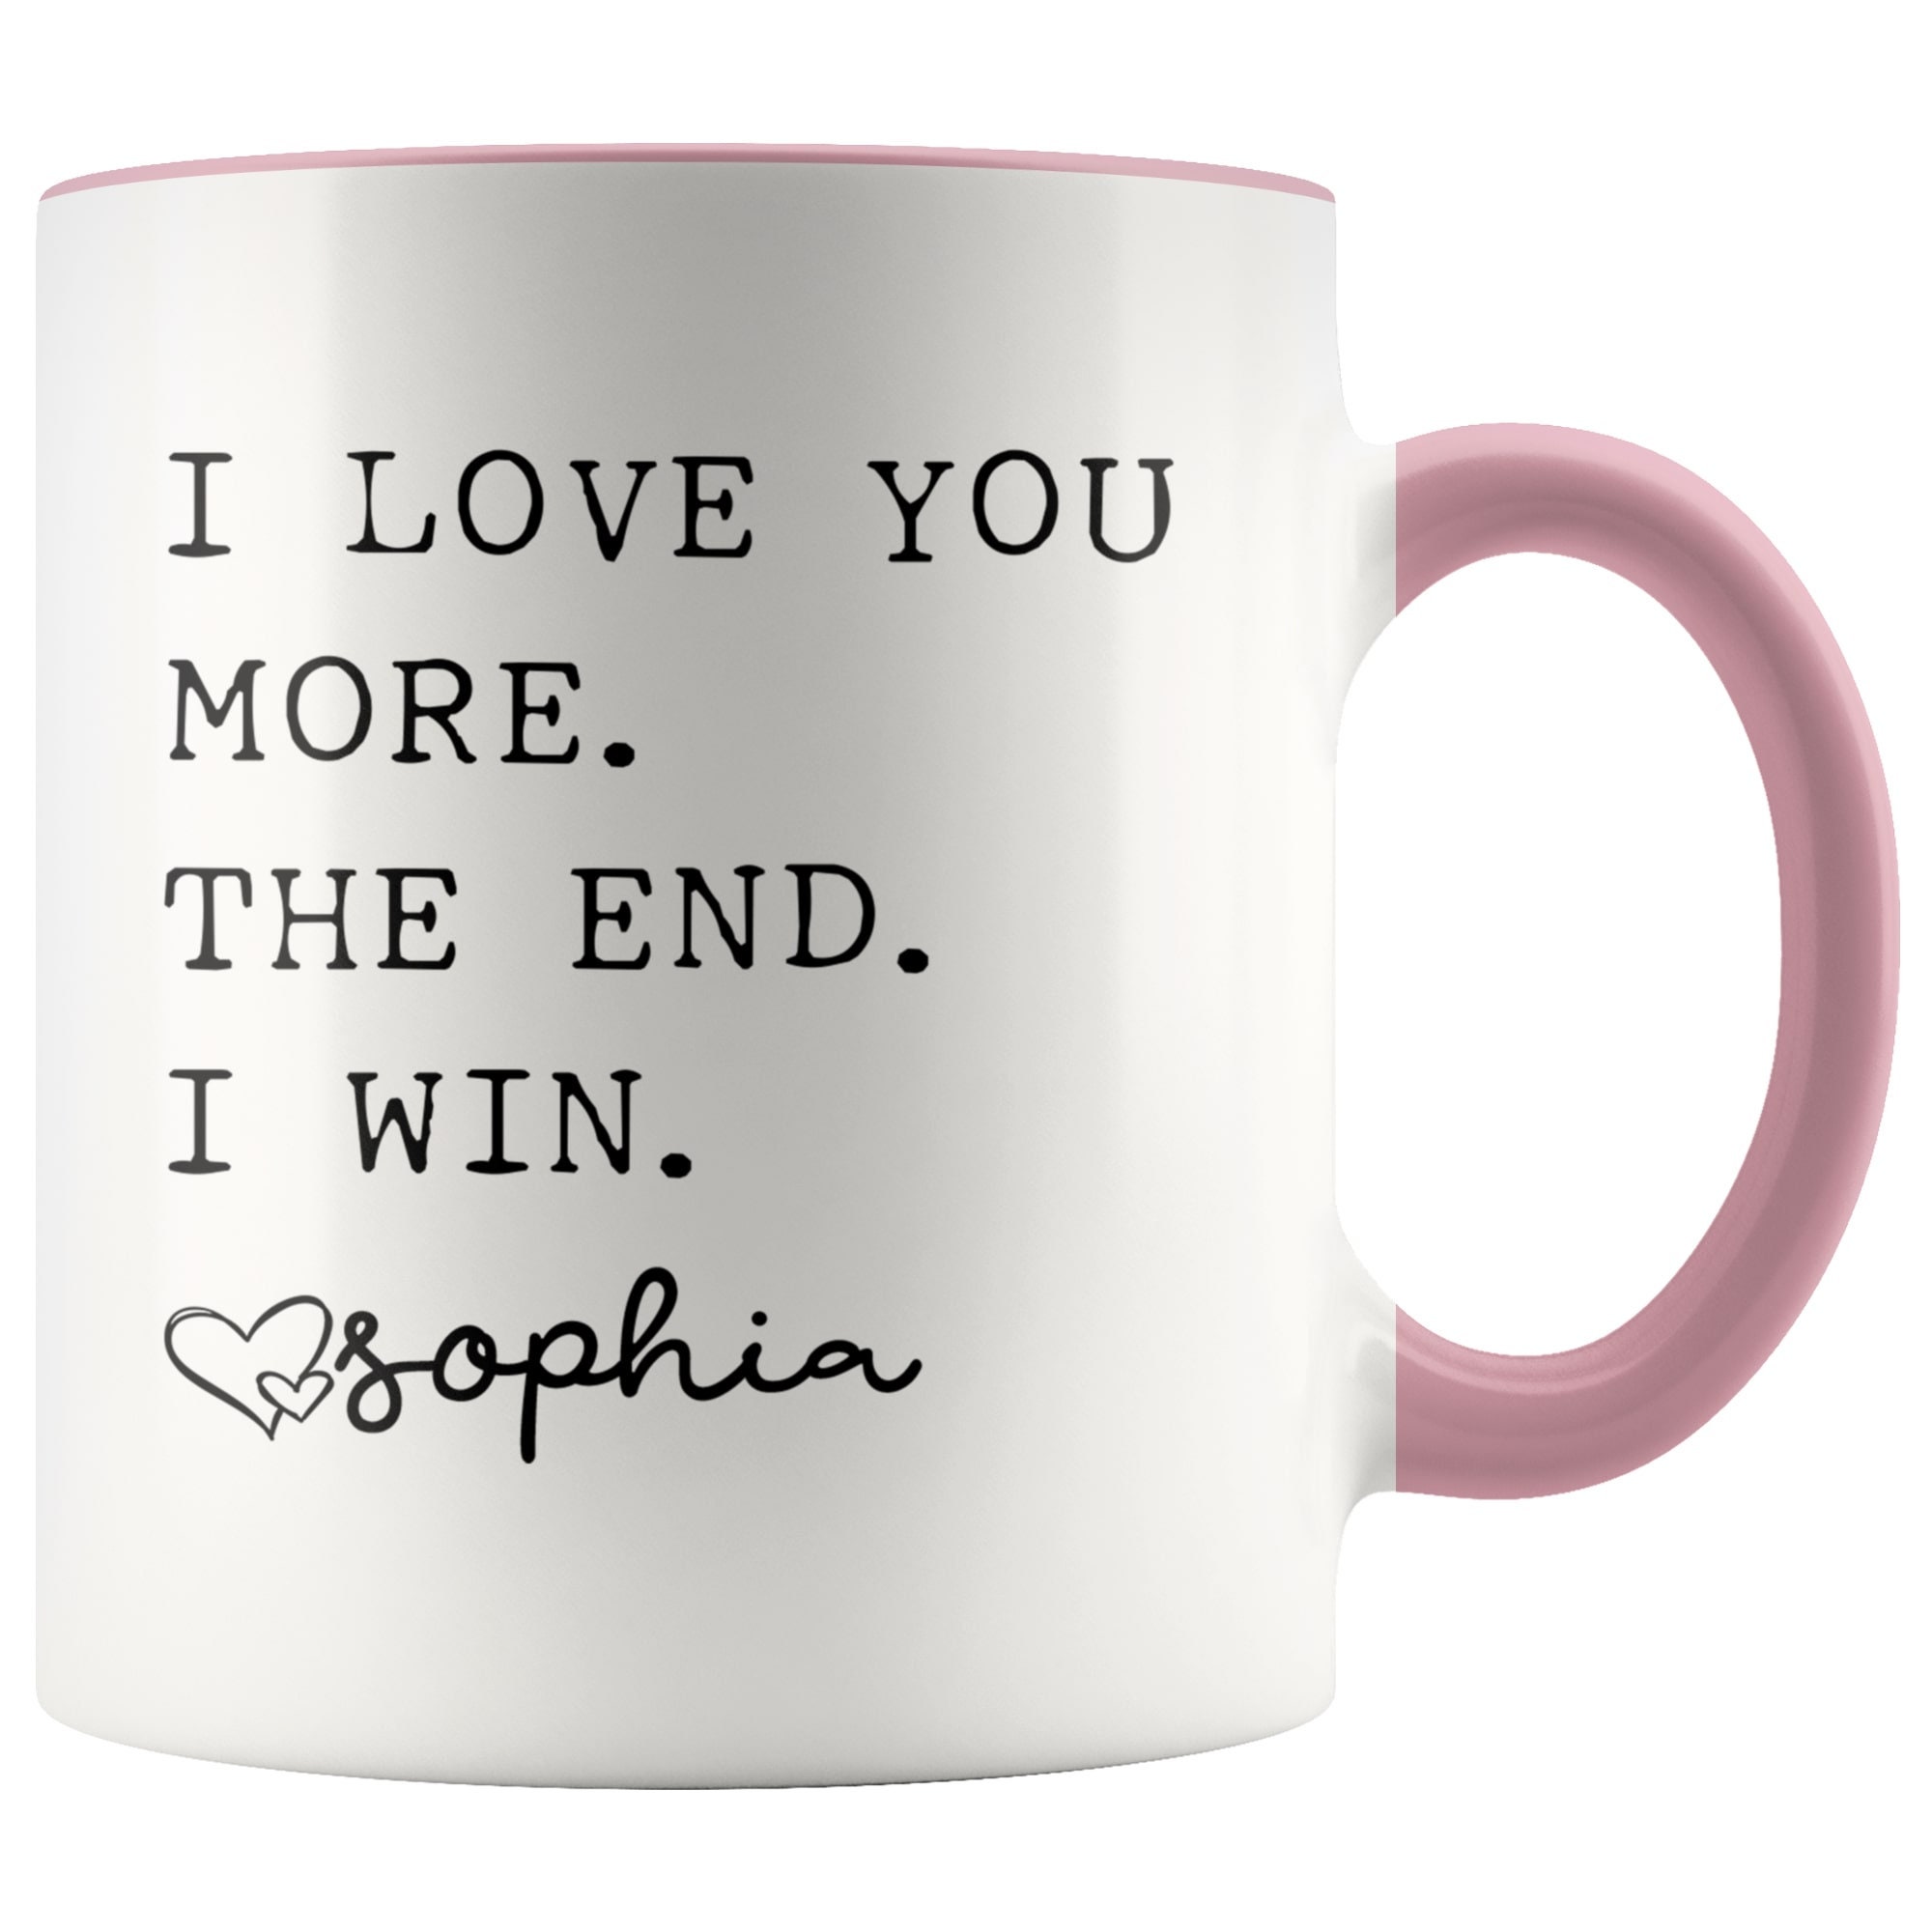 I love my edamommy Mom Mug - Ceramic Coffee Mug, Tea Cup, Flowers - Love  Gifts, Floral Cups - Mom Gifts - Mothers Day